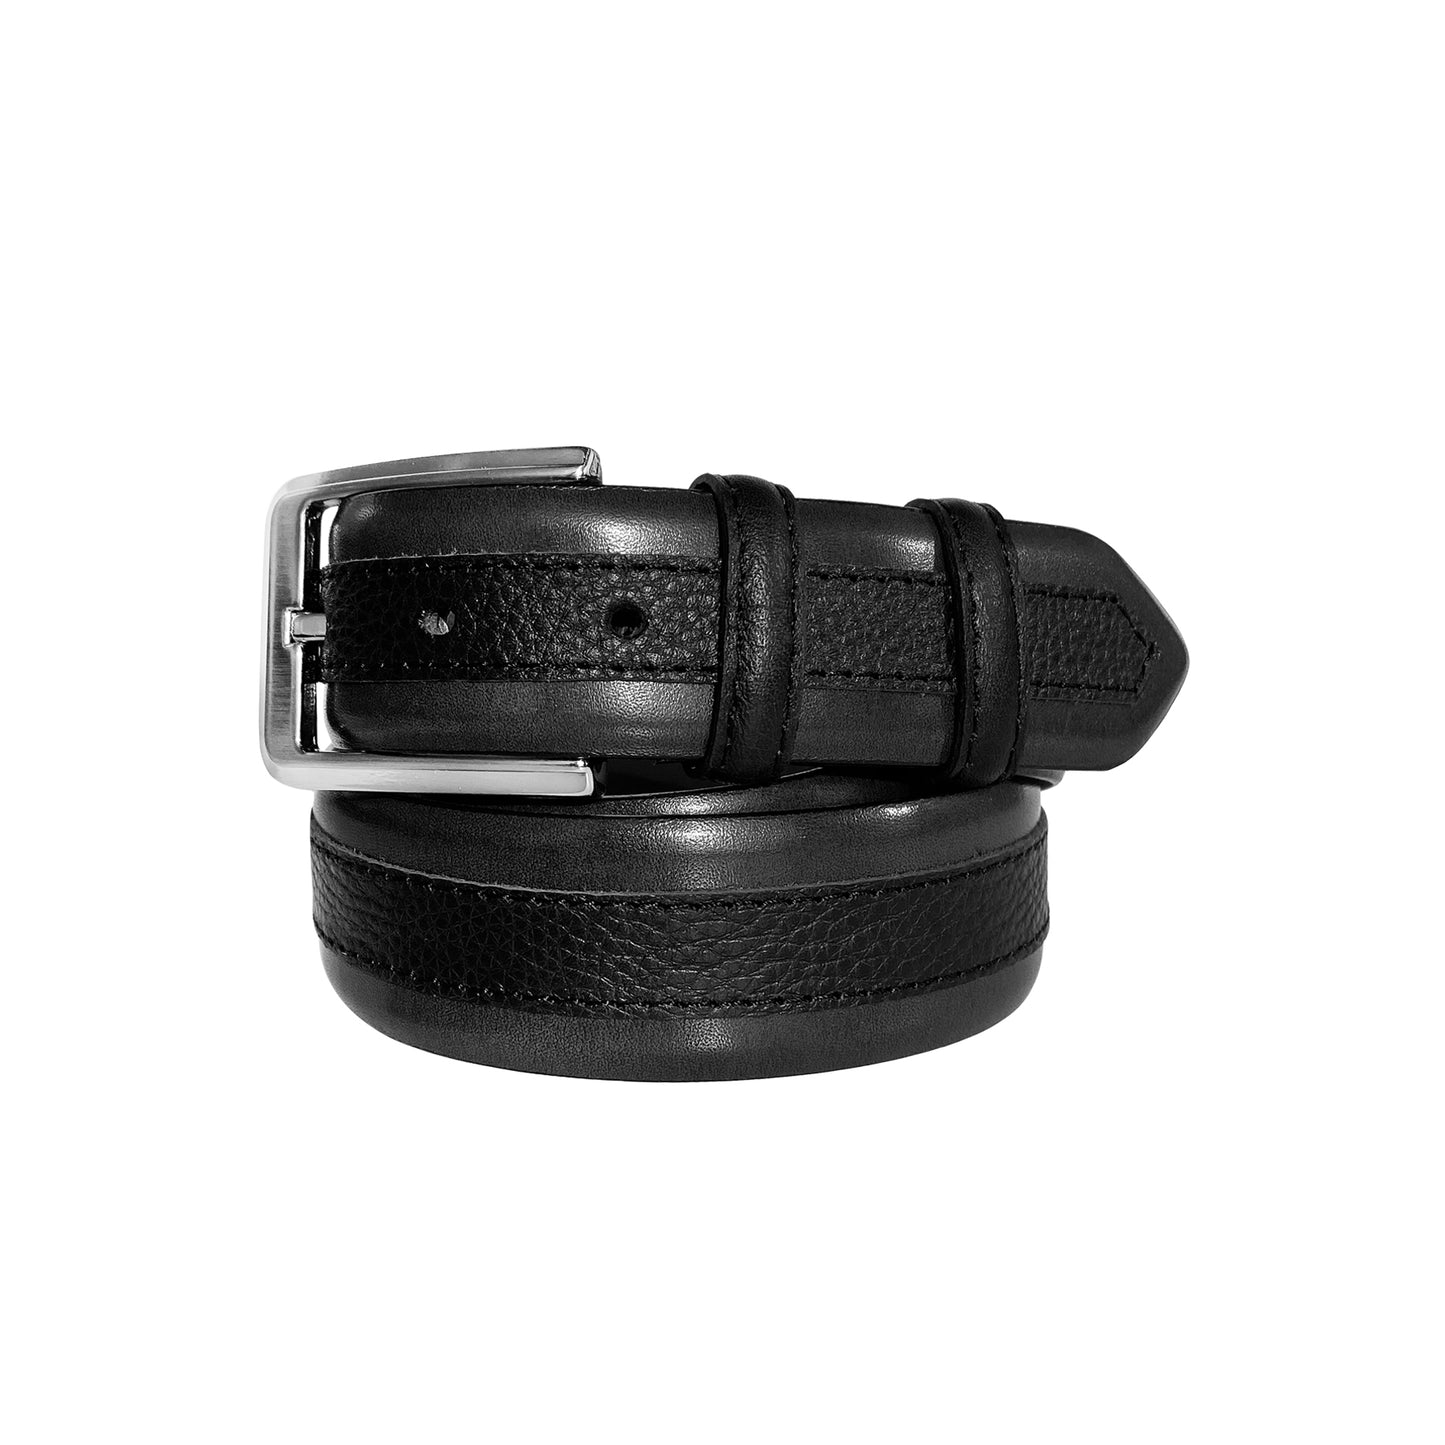 CBelt -4002 Contrast Leather Belt - Grey-Black